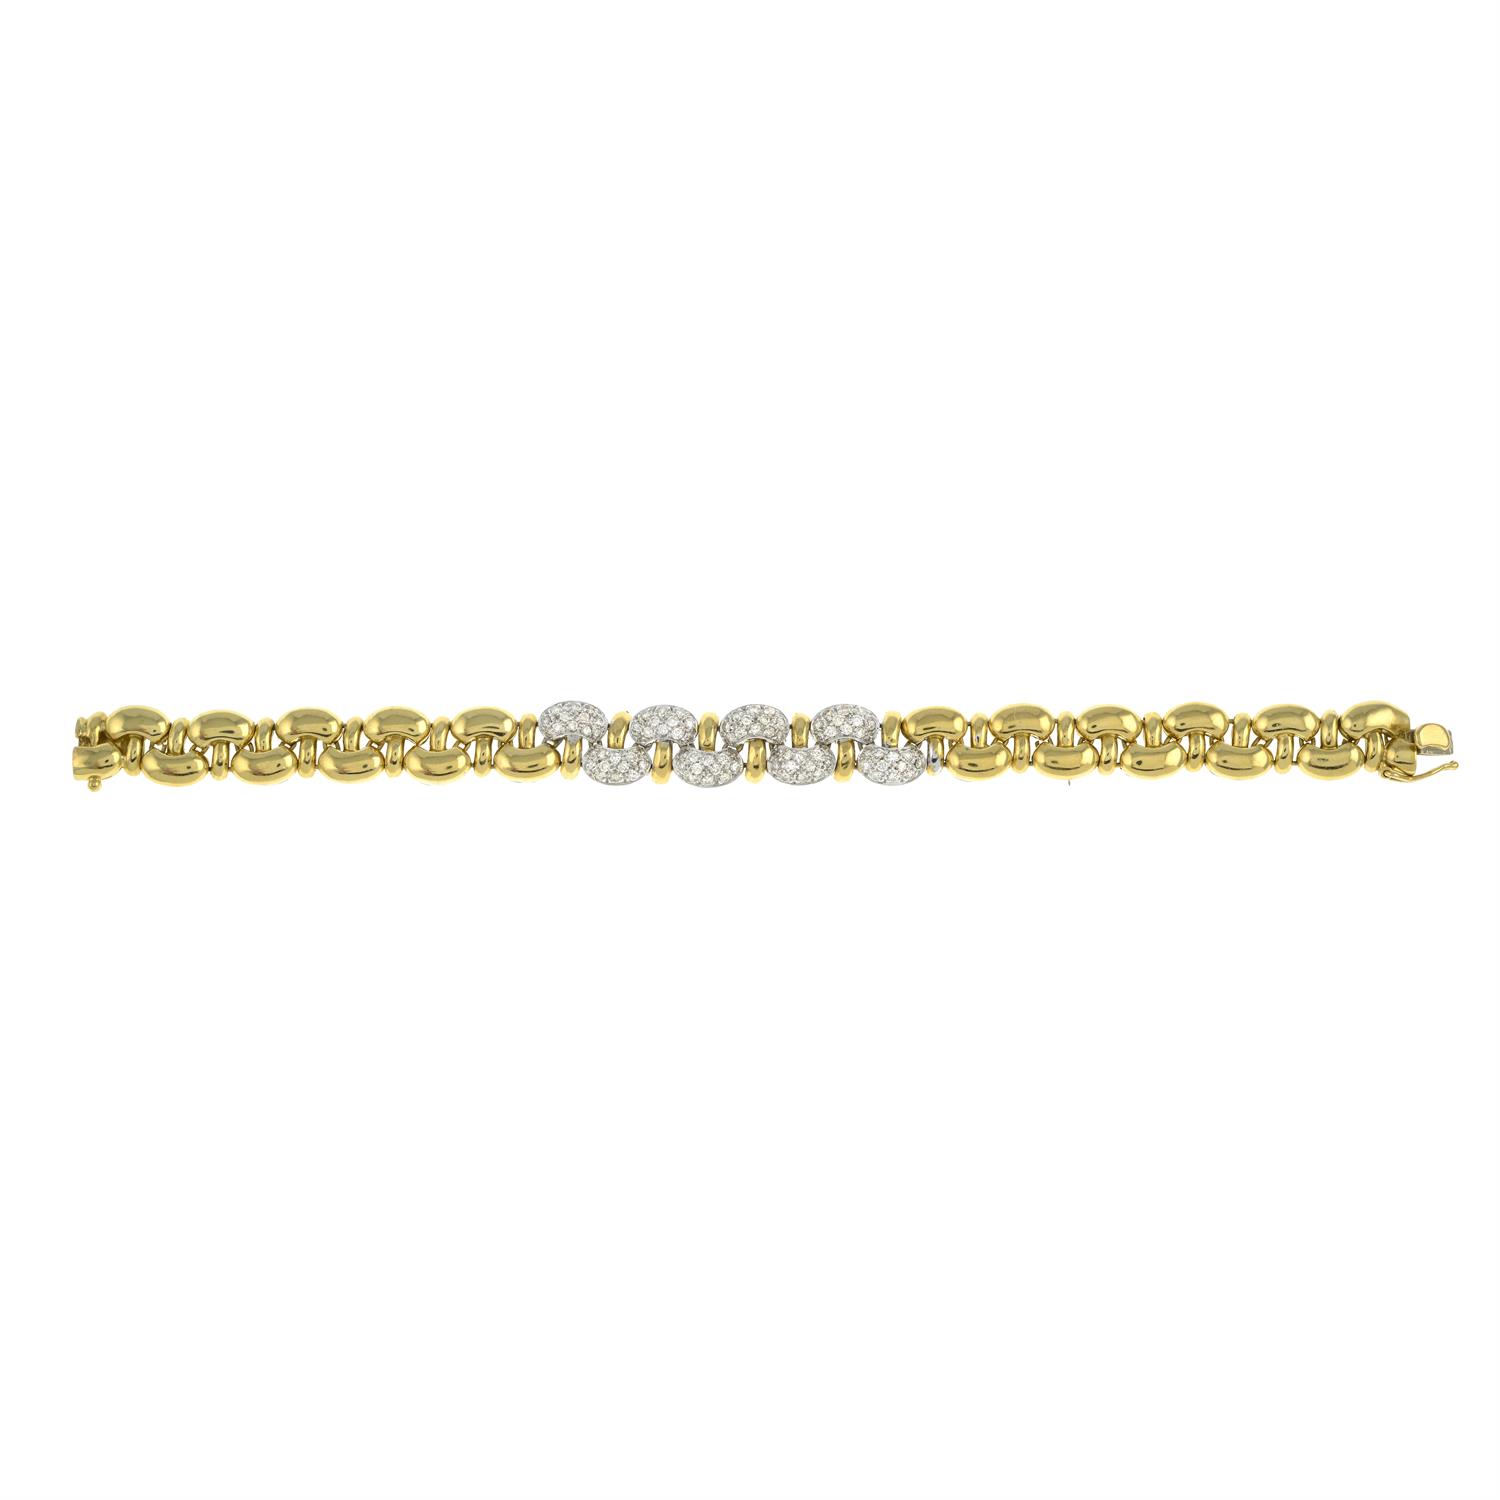 Diamond necklace and matching bracelet - Image 7 of 7